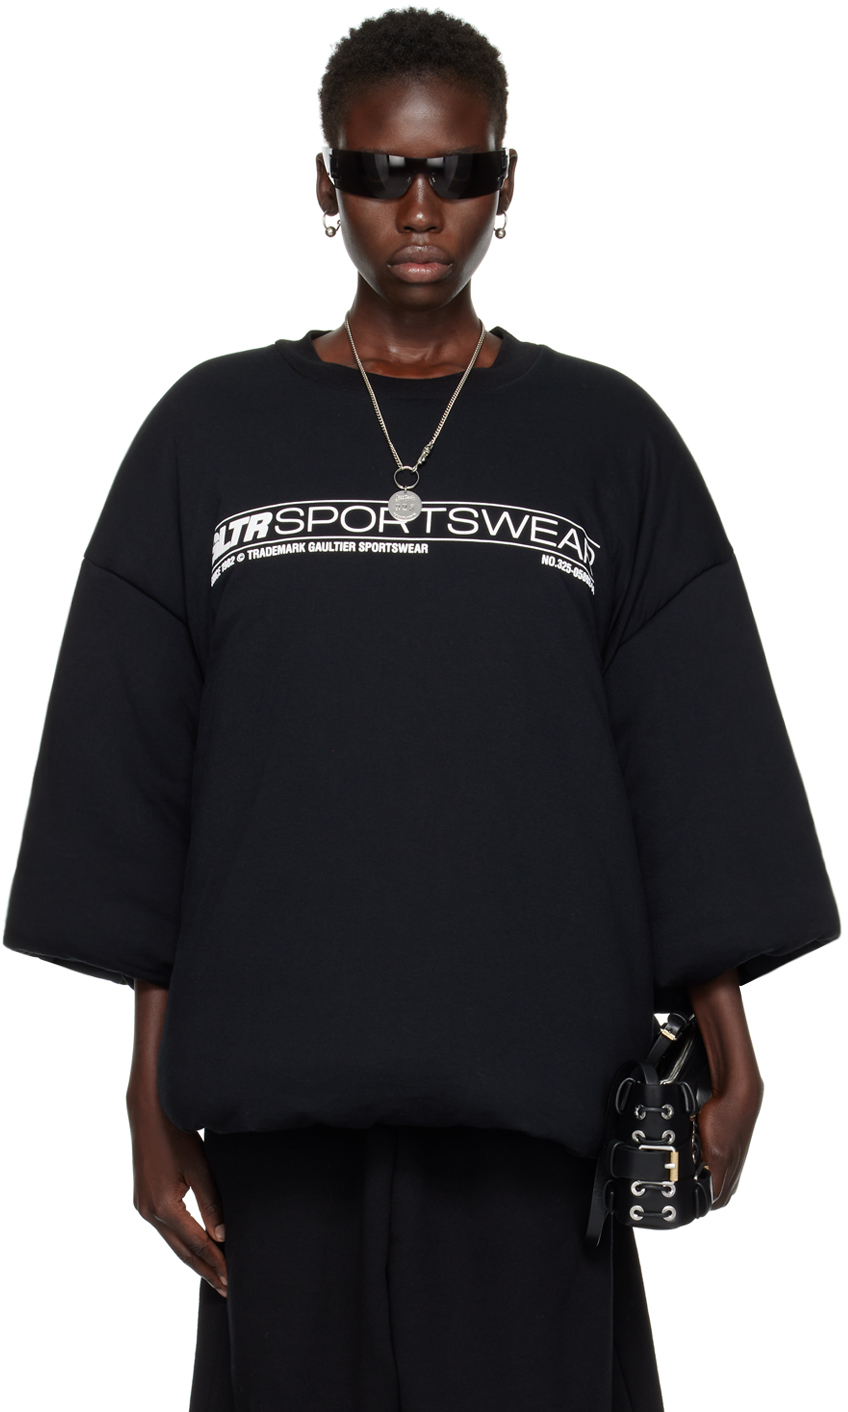 Black Shayne Oliver Edition T-Shirt